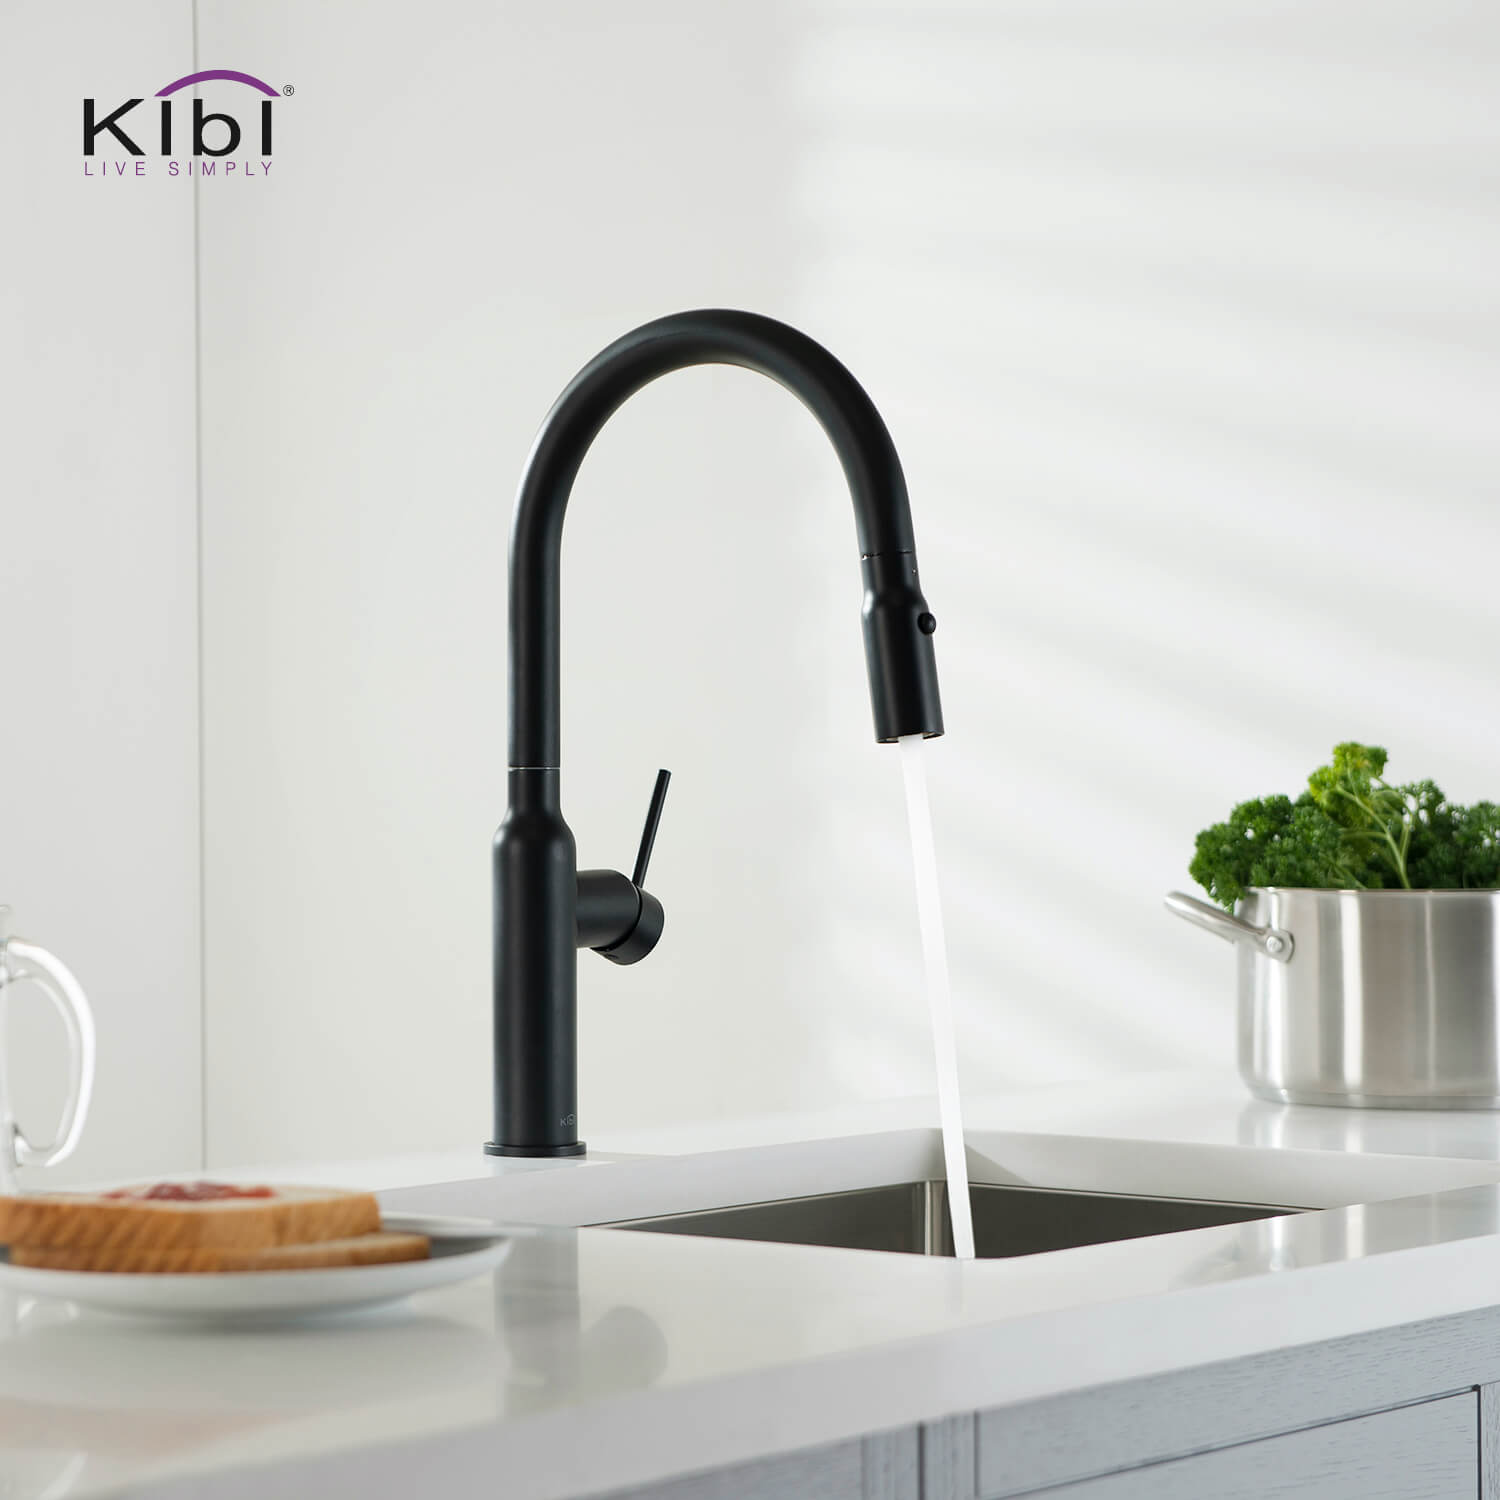 Kibi Hilo Single Handle High Arc Pull Down Kitchen Faucet in Matte Black Finish